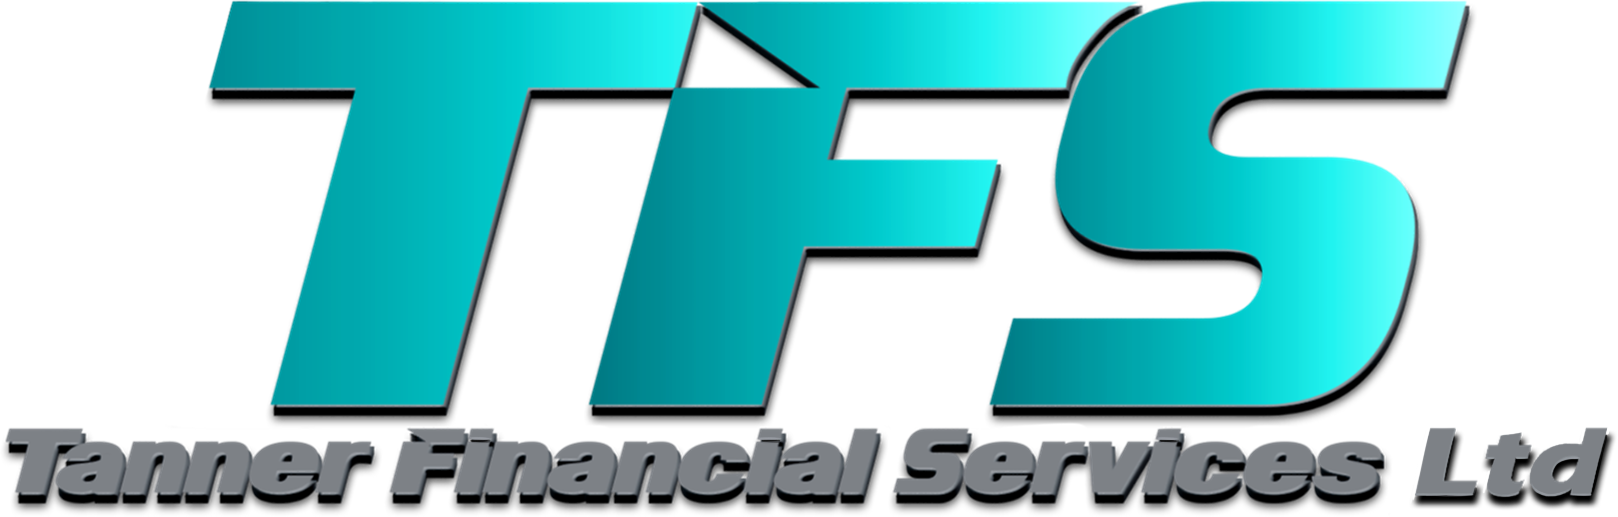 Tanner Financial Services Ltd Main Logo